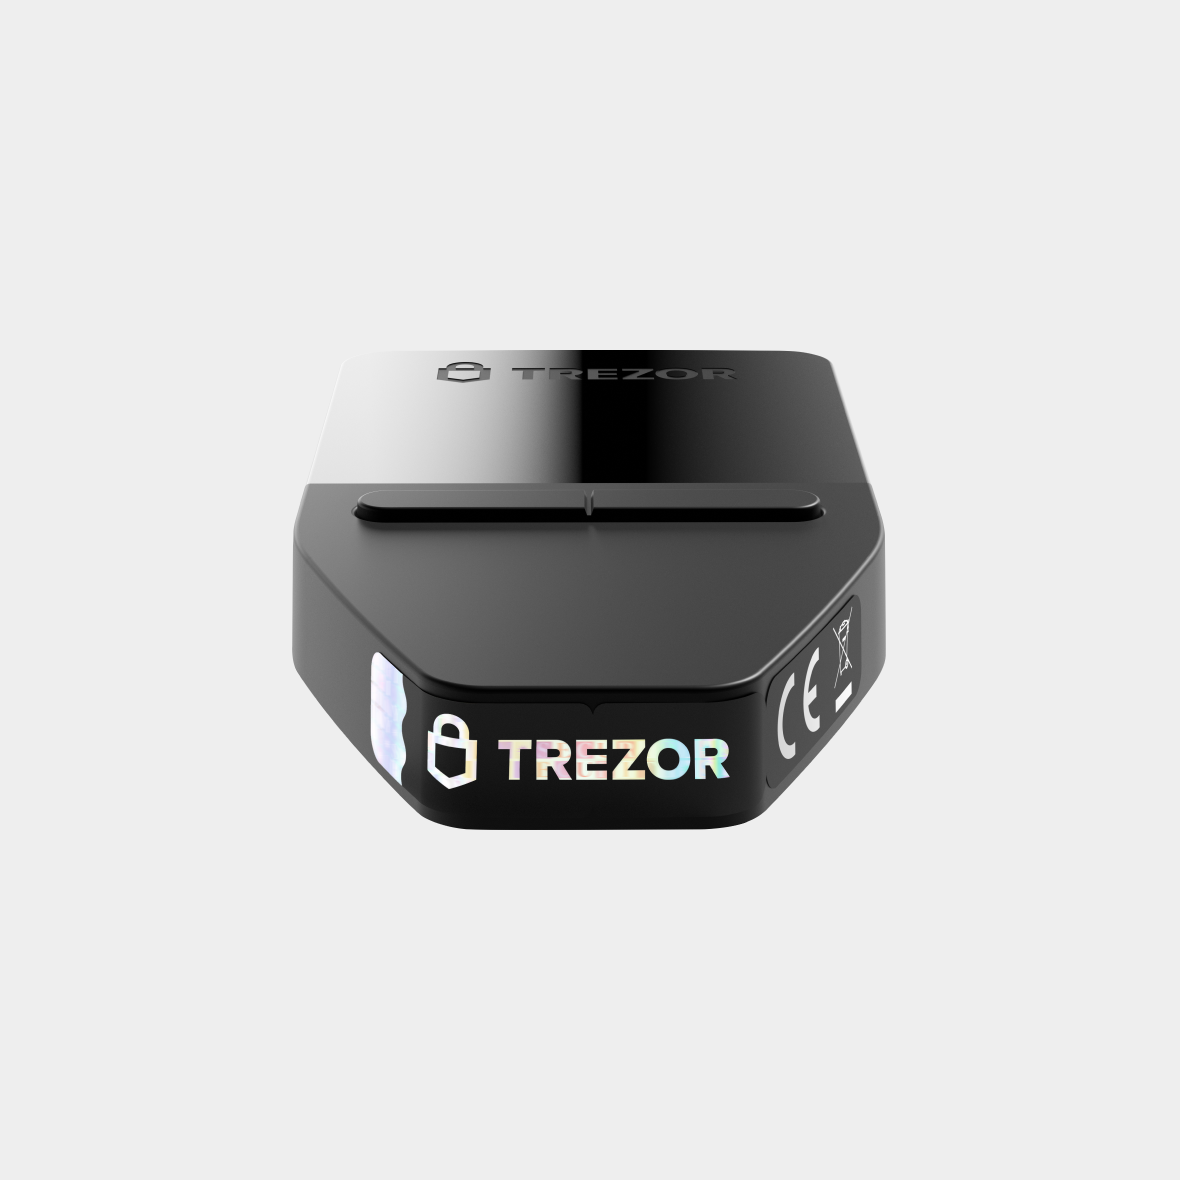 Trezor Safe Family | Crypto security made easy for everyone